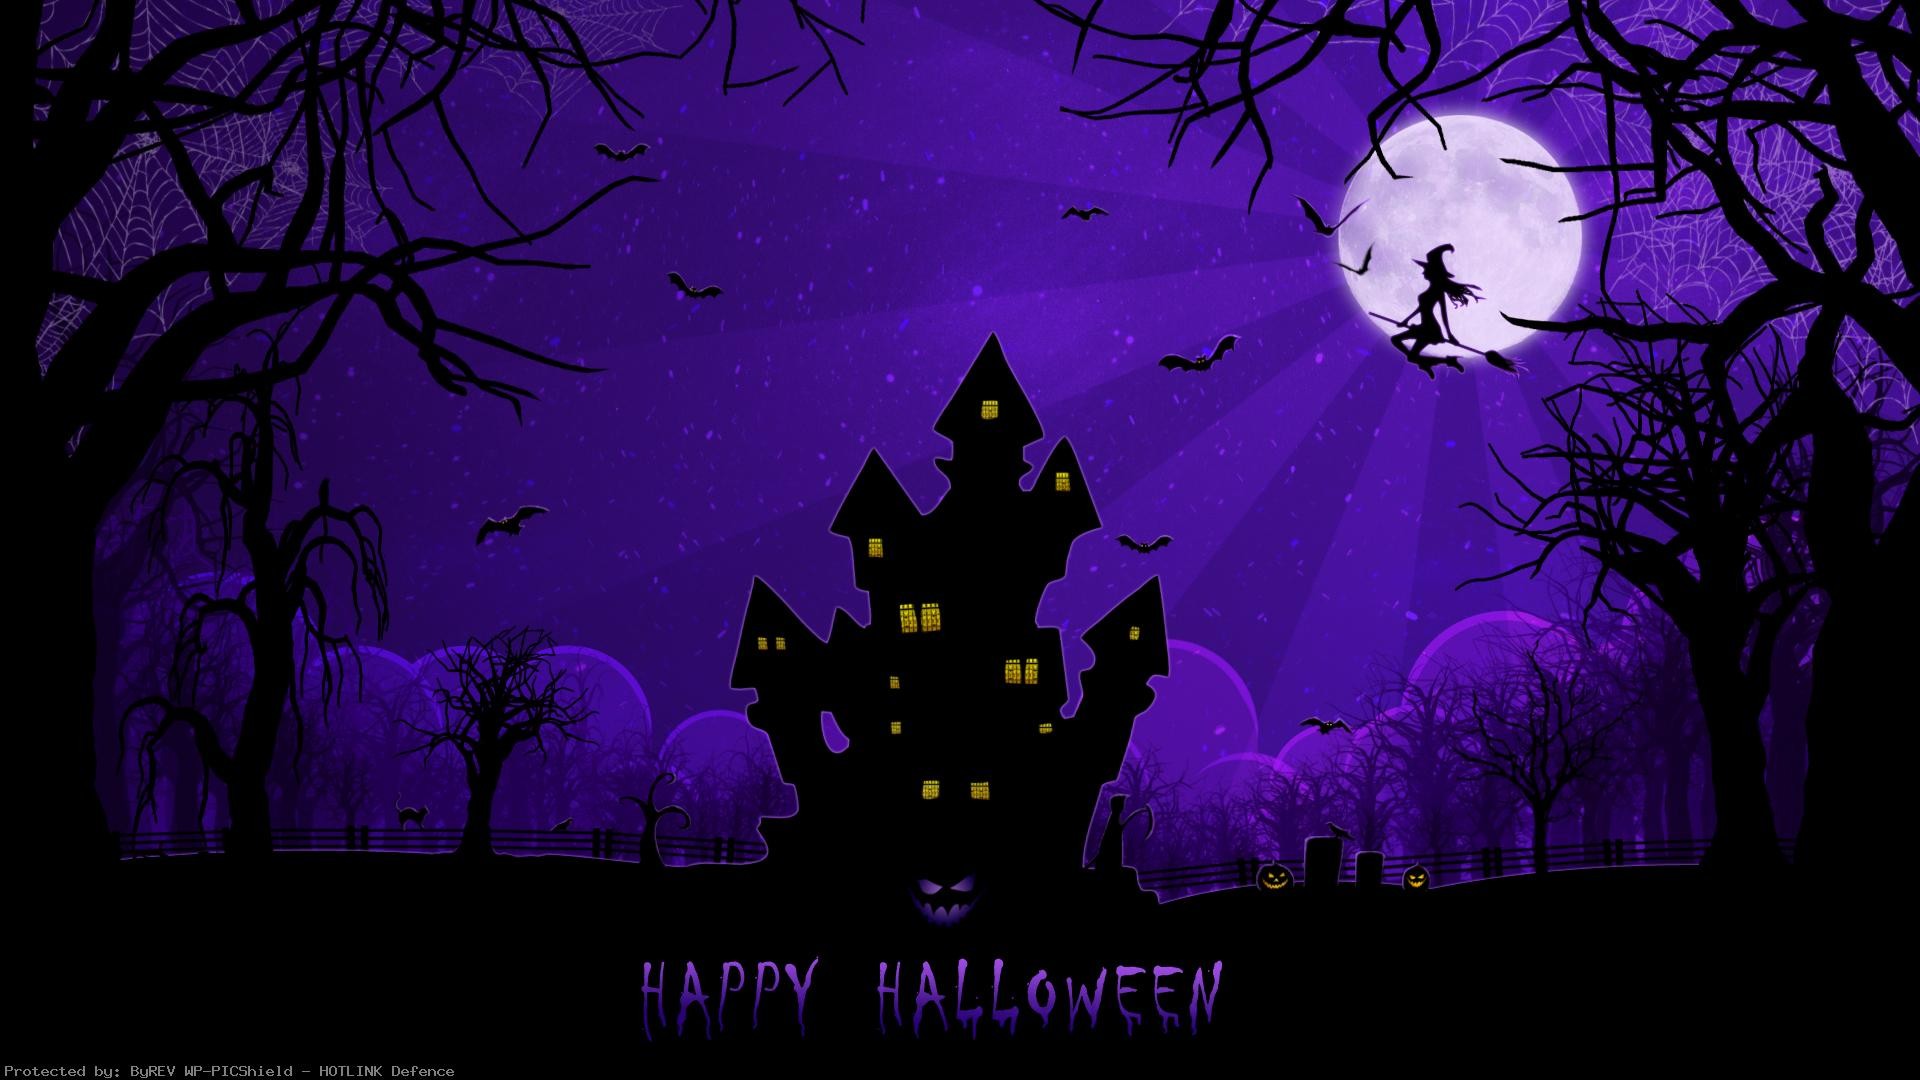 1920x1080 Spooky-Halloween-Images-wallpaper-wp38010403